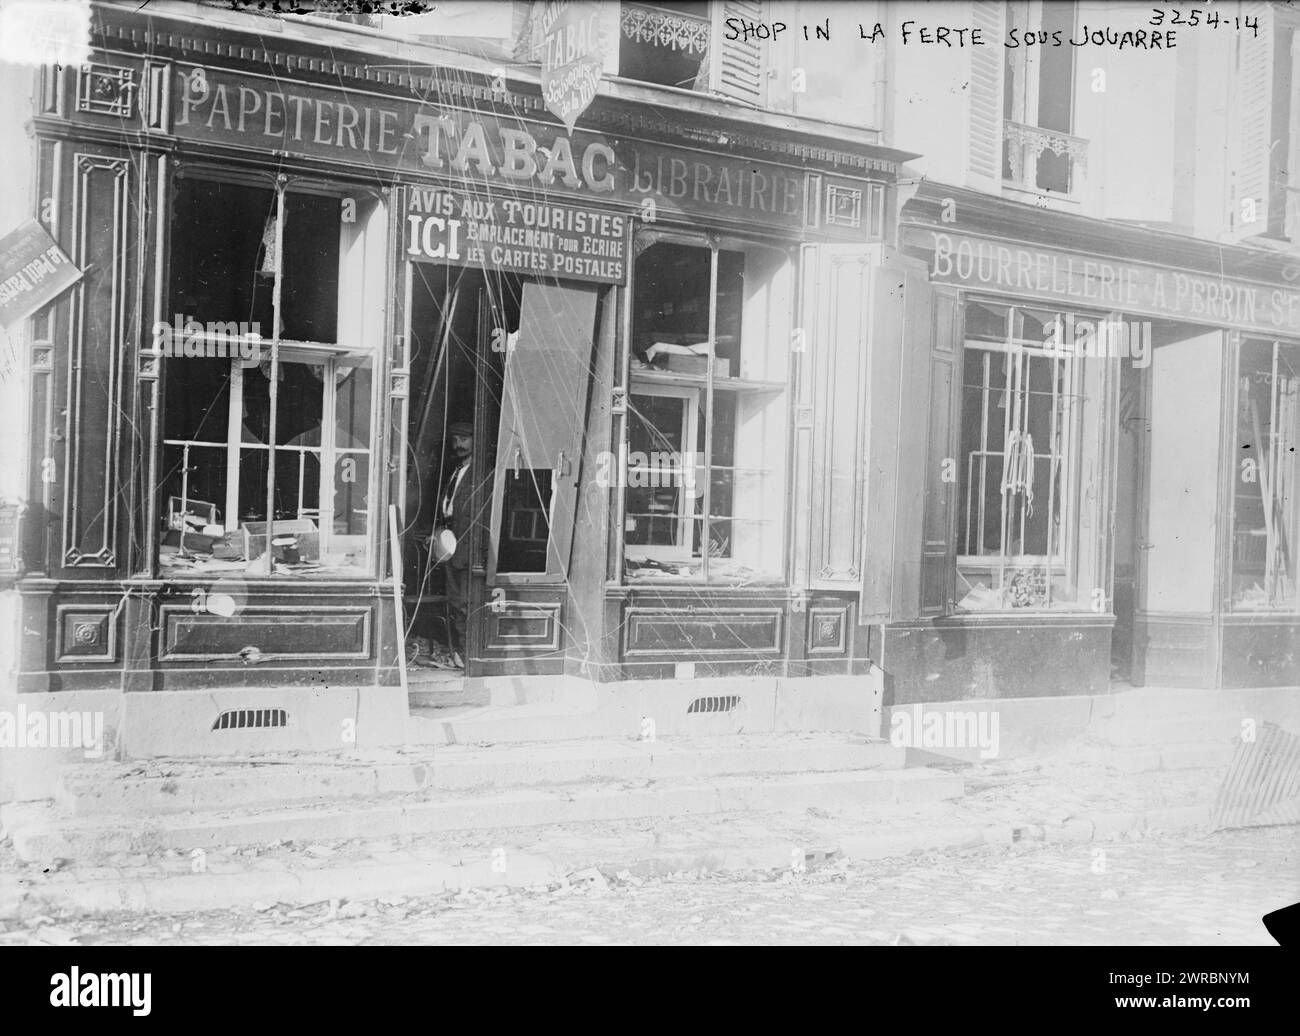 Shop in La Ferte Sous Jouarre, Photograph shows shops in La Ferté-sous-Jouarre, France which were damaged in World War I., 1914 Oct. 7?, World War, 1914-1918, Glass negatives, 1 negative: glass Stock Photo